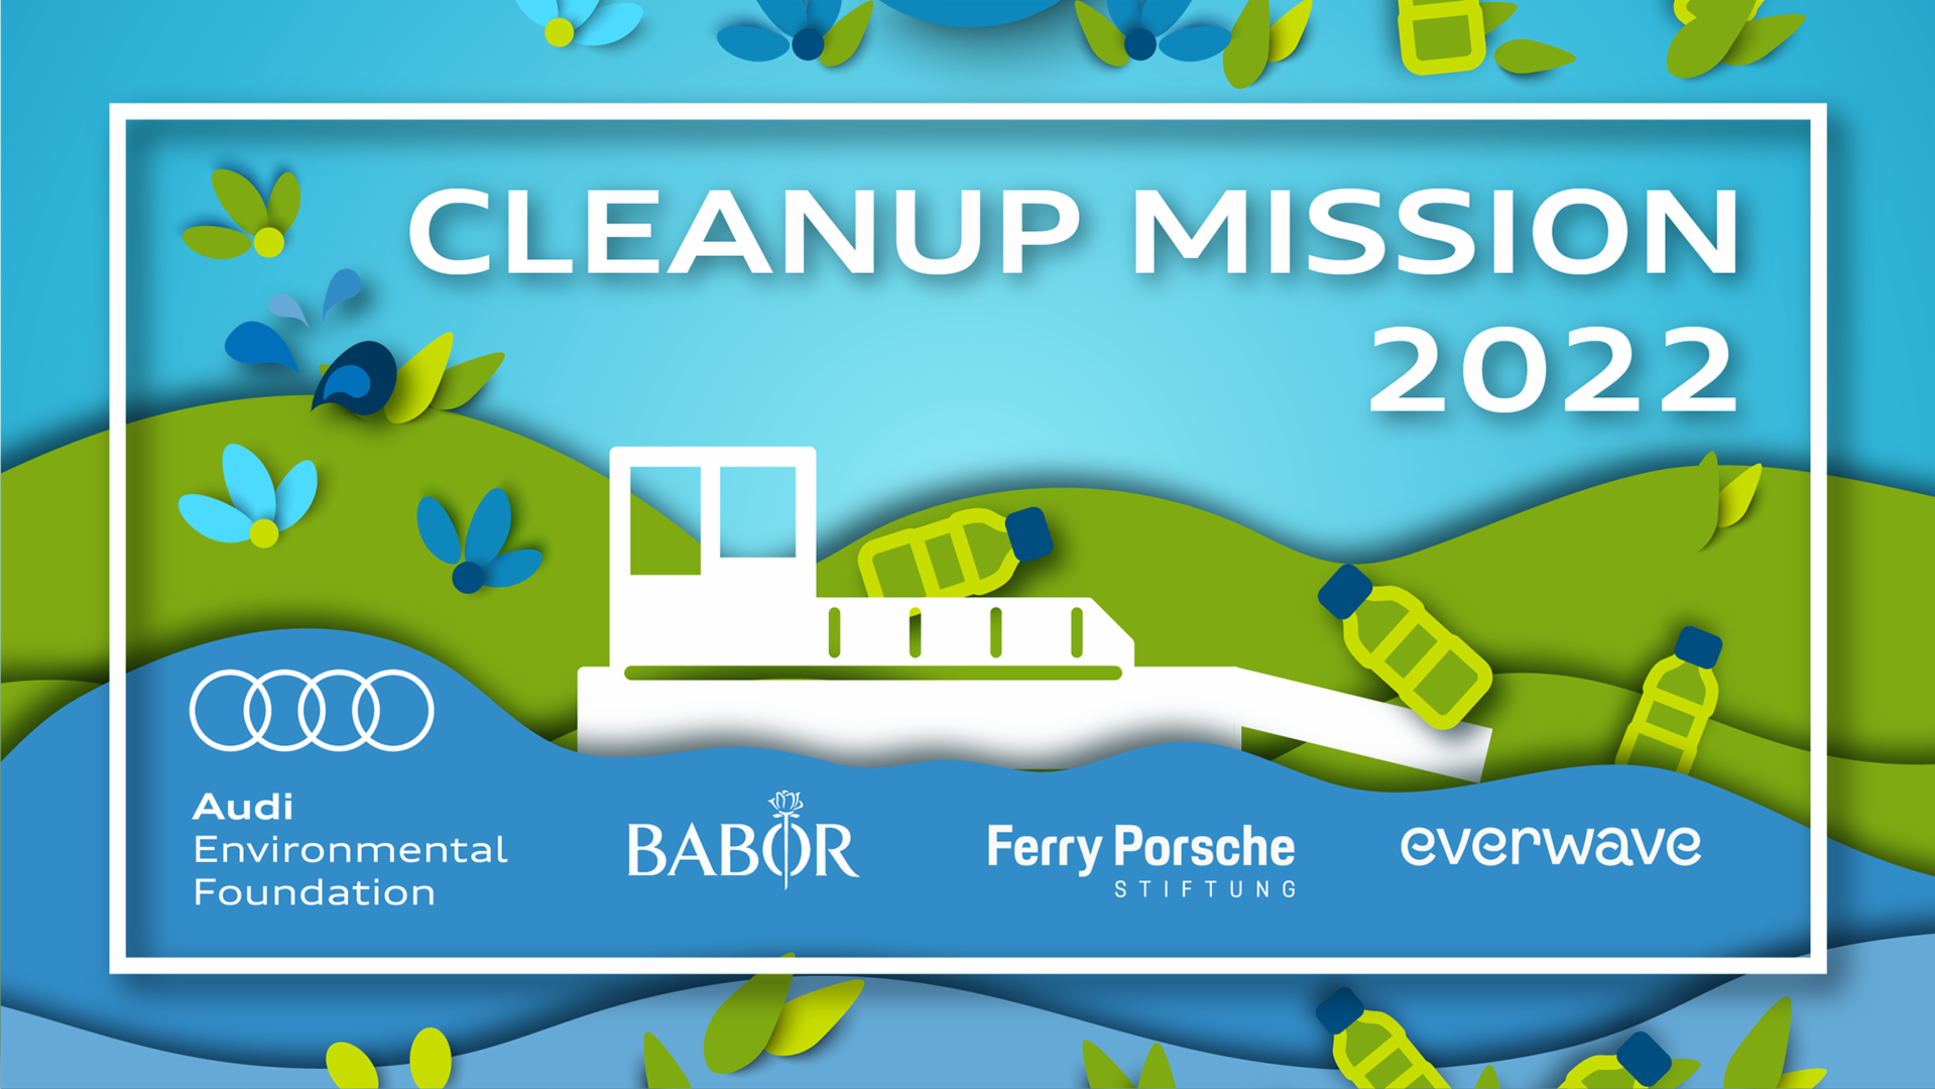 Ferry-Porsche-Stiftung, clean-up mission in Romania, 2022, Porsche AG